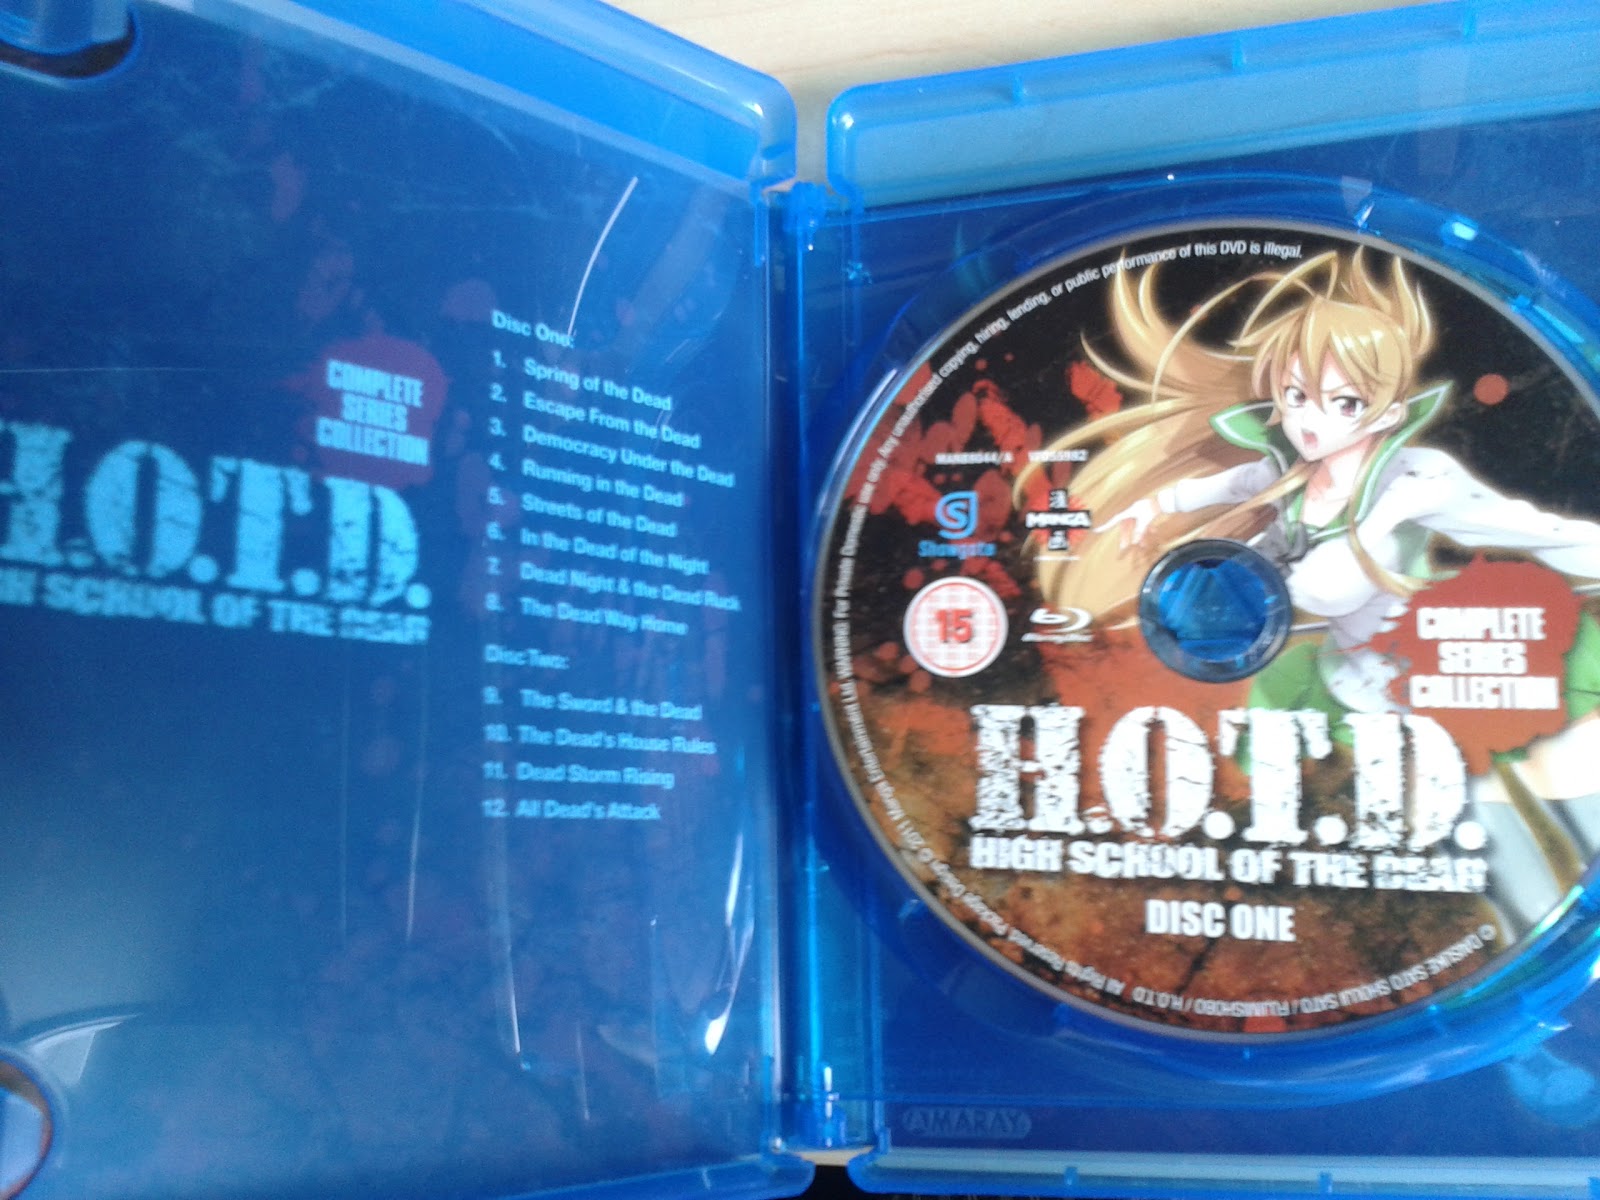 Animation - Highschool of the Dead 4 - Japan Blu-ray Disc – CDs Vinyl Japan  Store